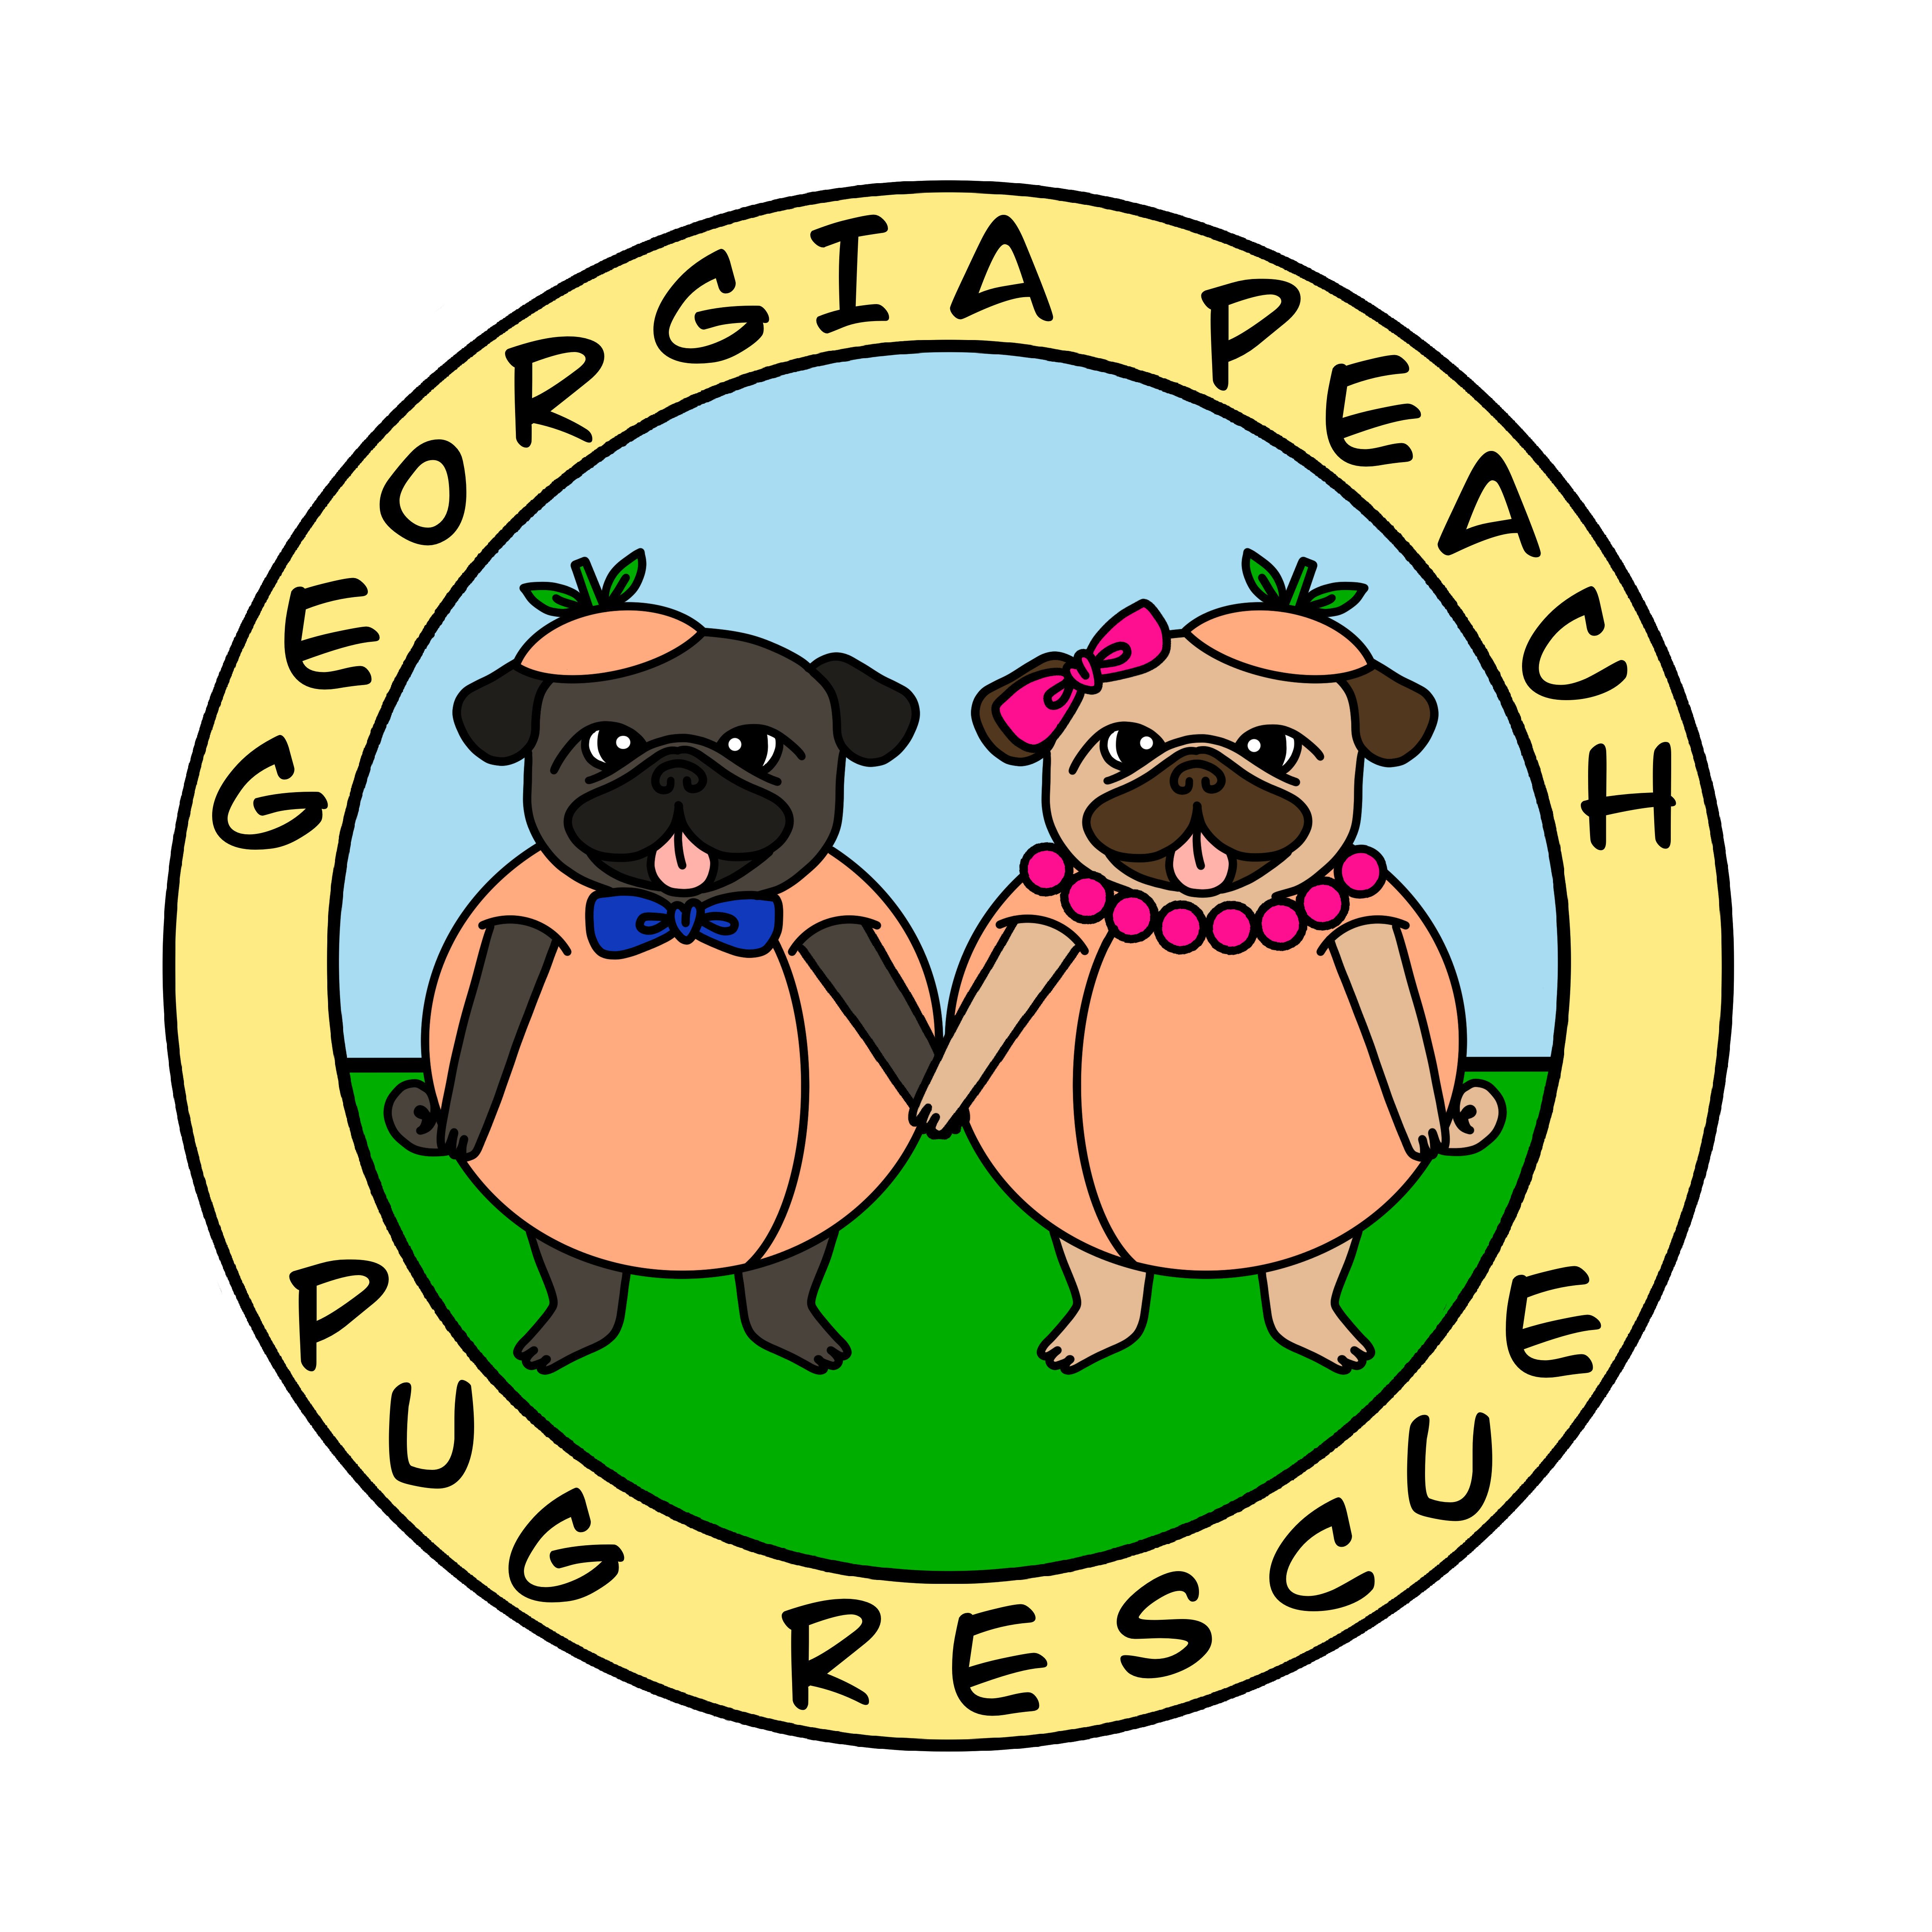 Georgia Peach Pug Rescue